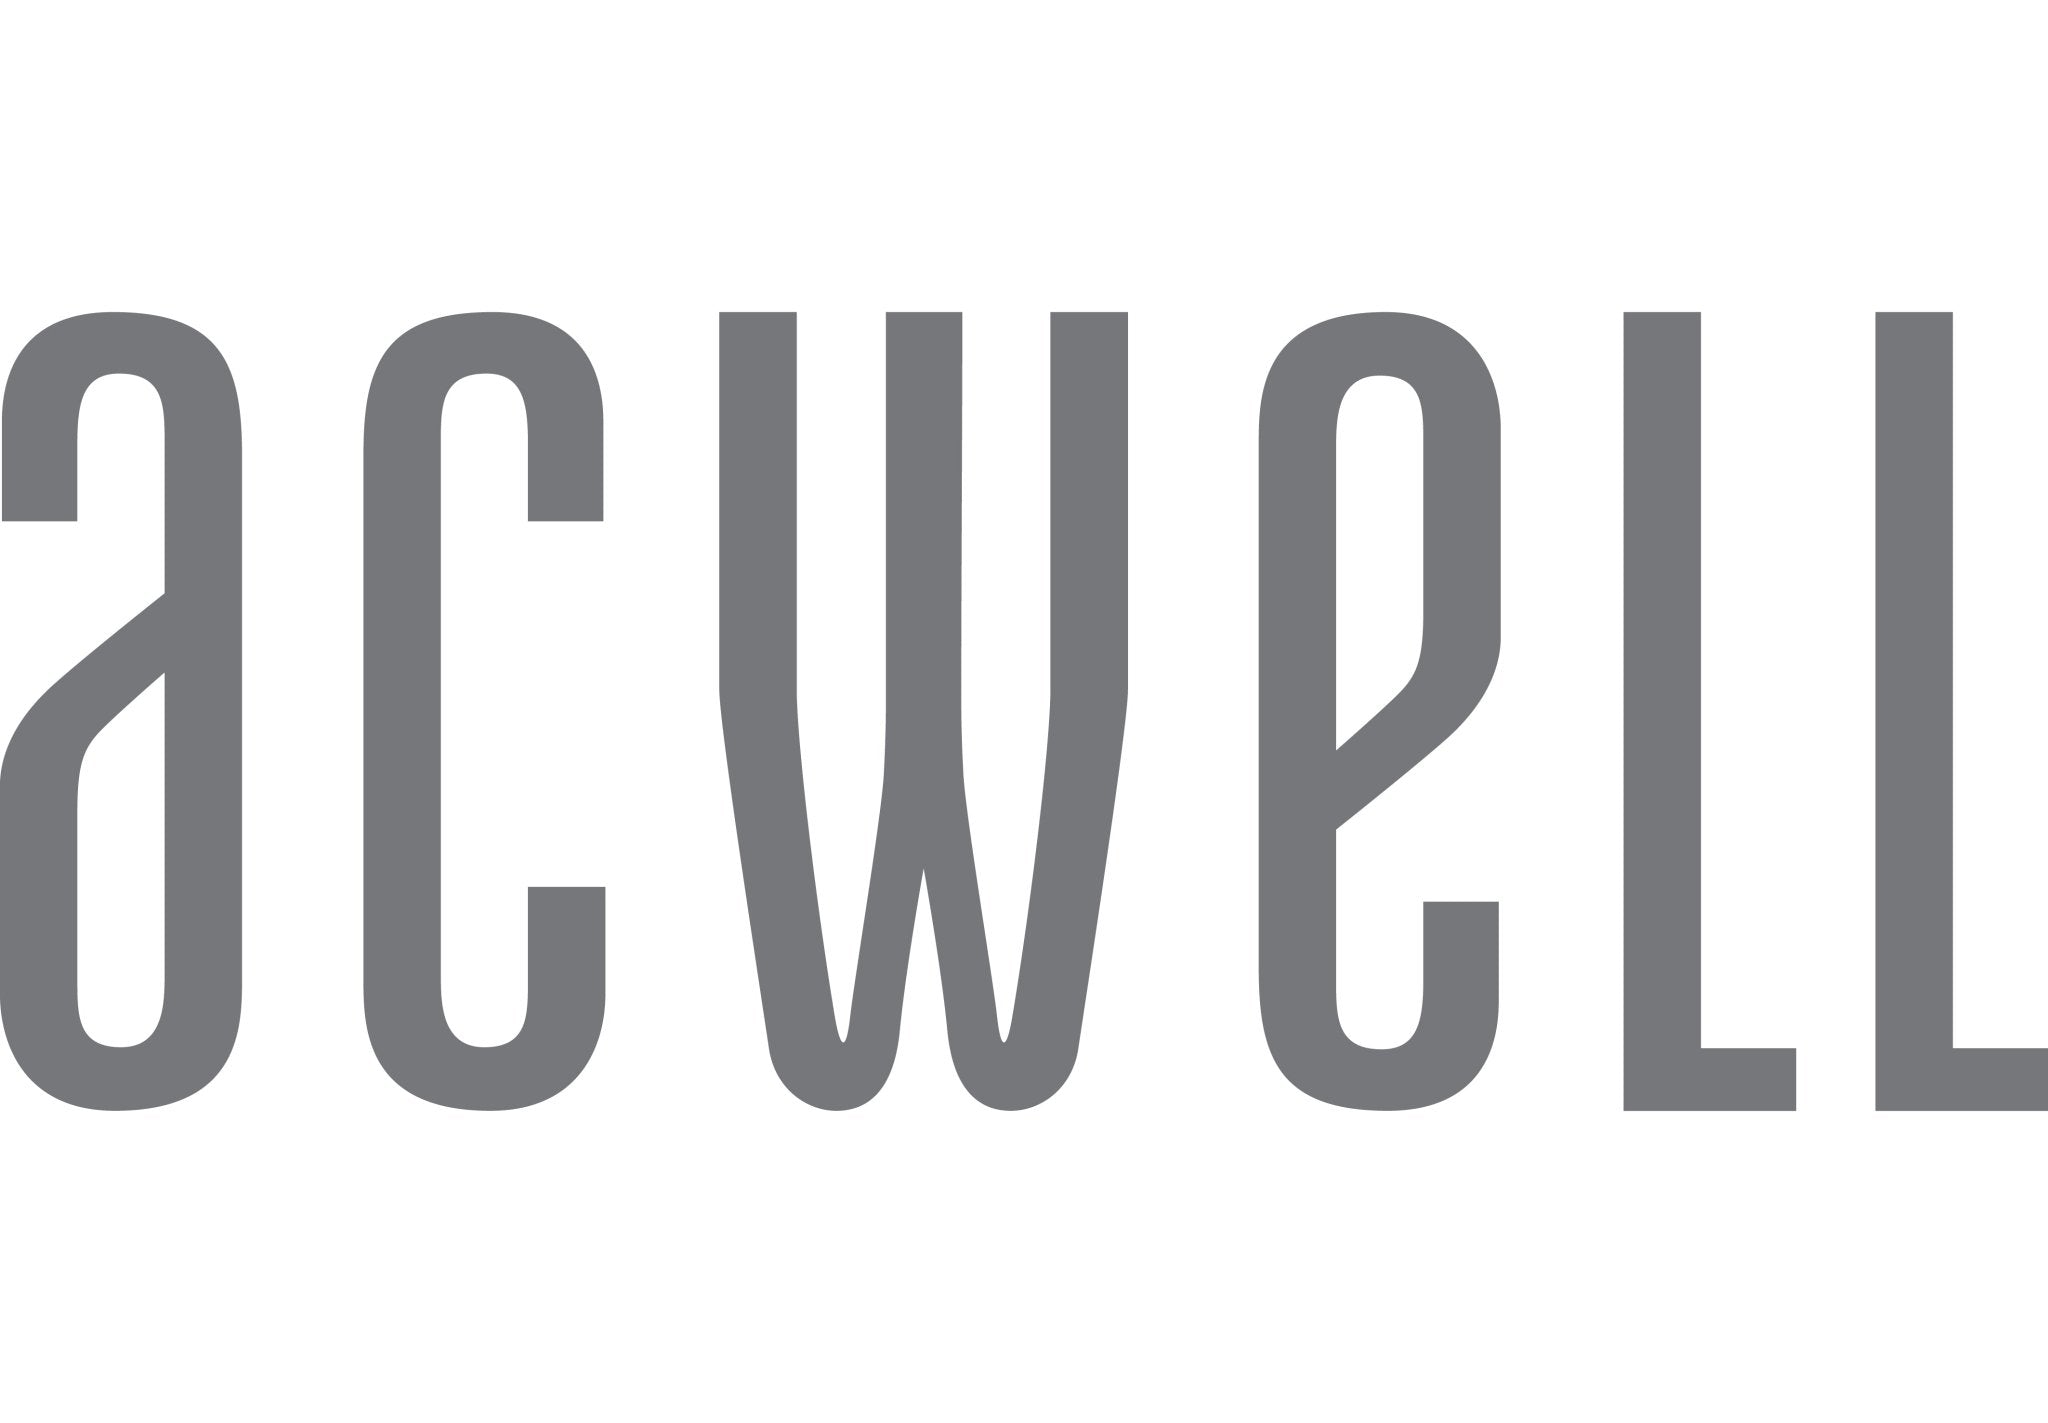 Acwell Ürünleri - Flavuscom